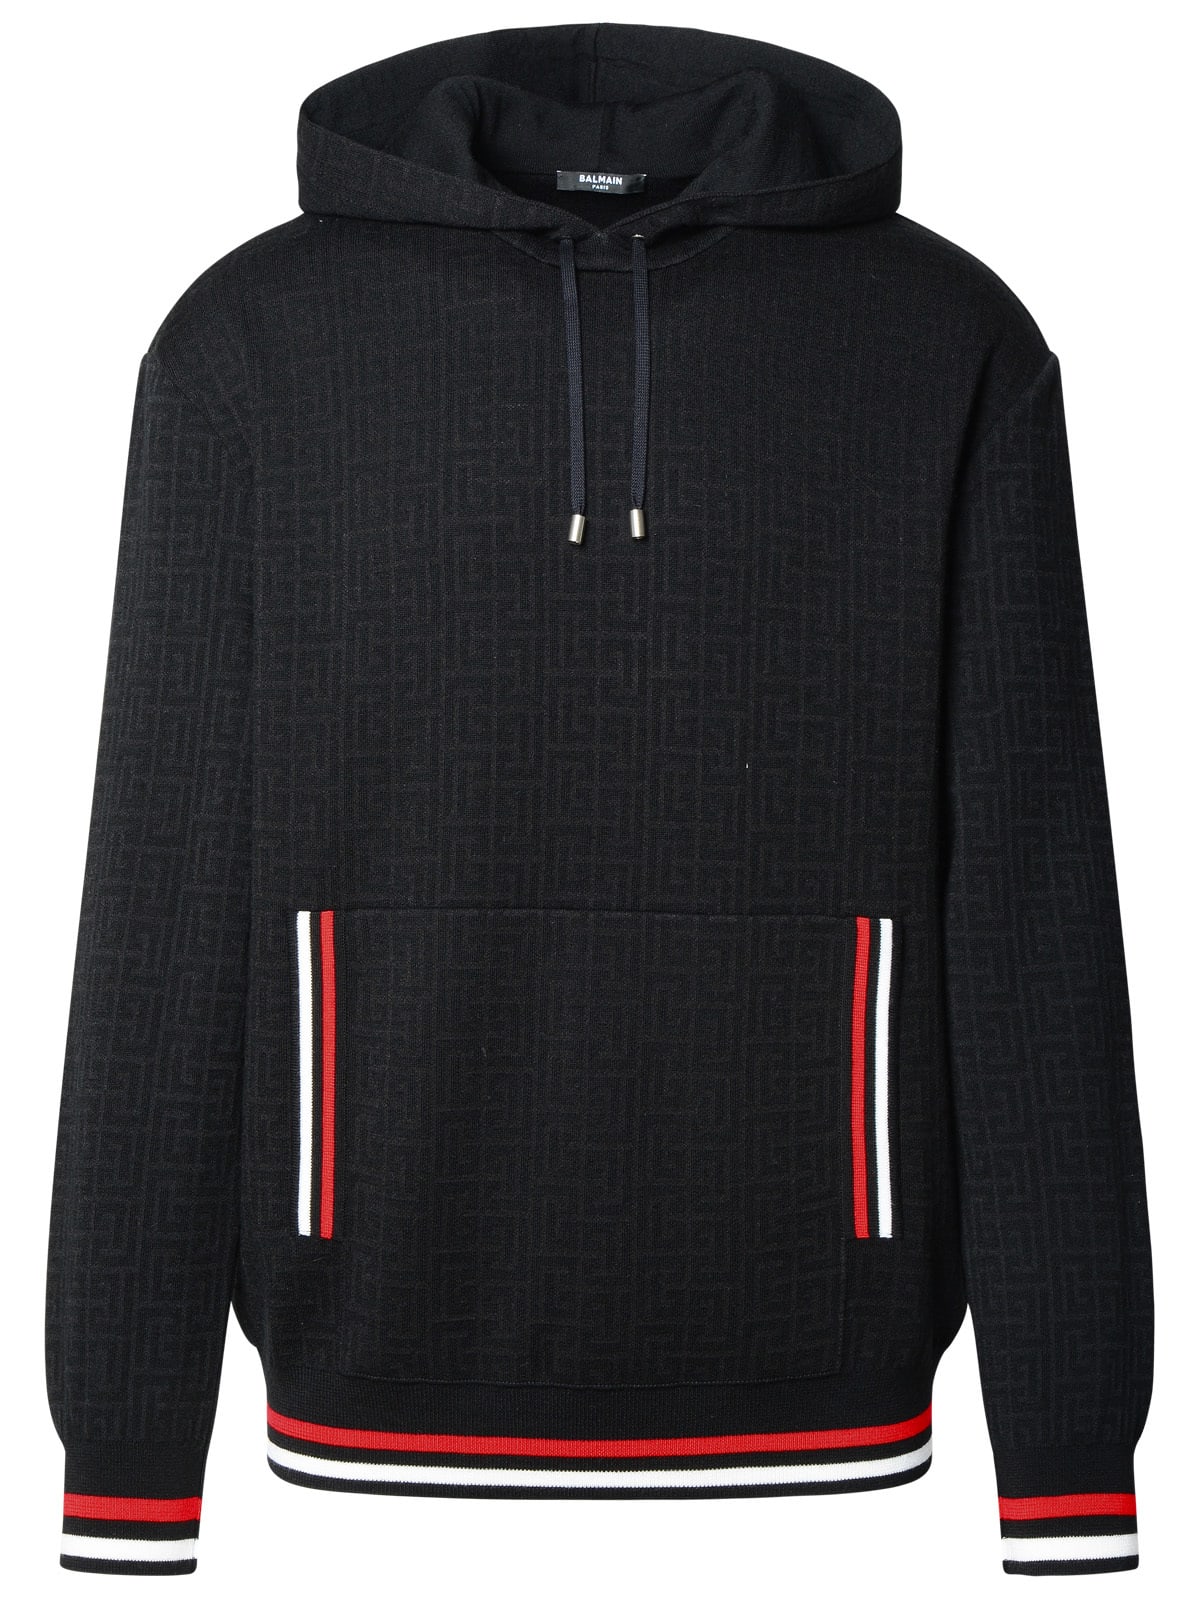 Shop Balmain Black Merino Wool Blend Sweater